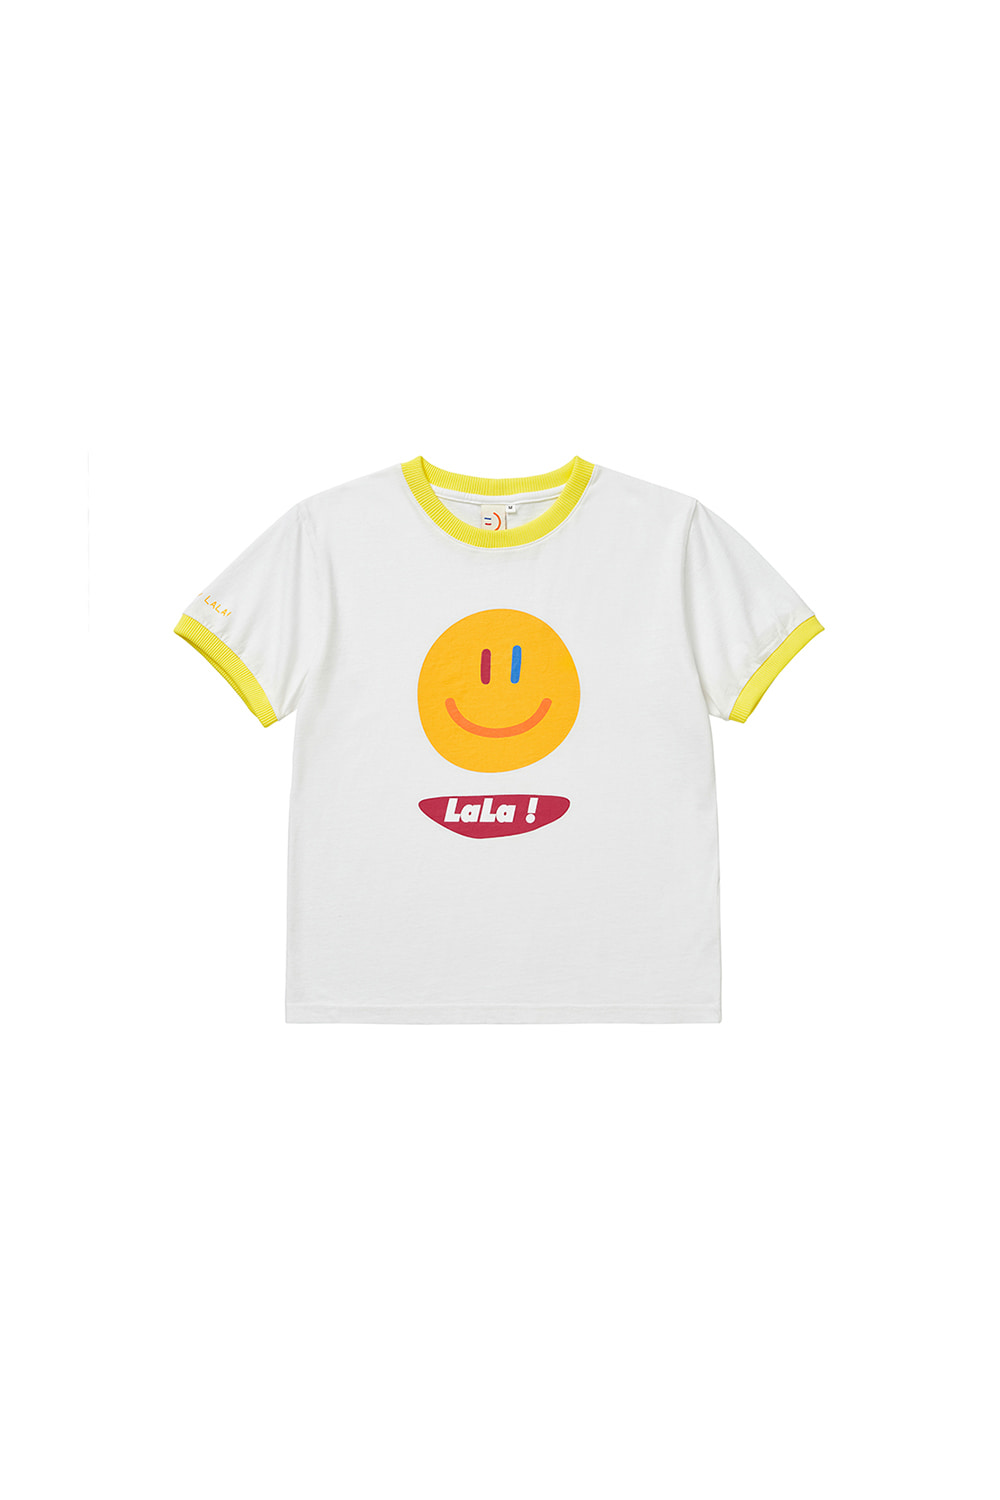 LaLa Twotone T-shirt [Yellow]